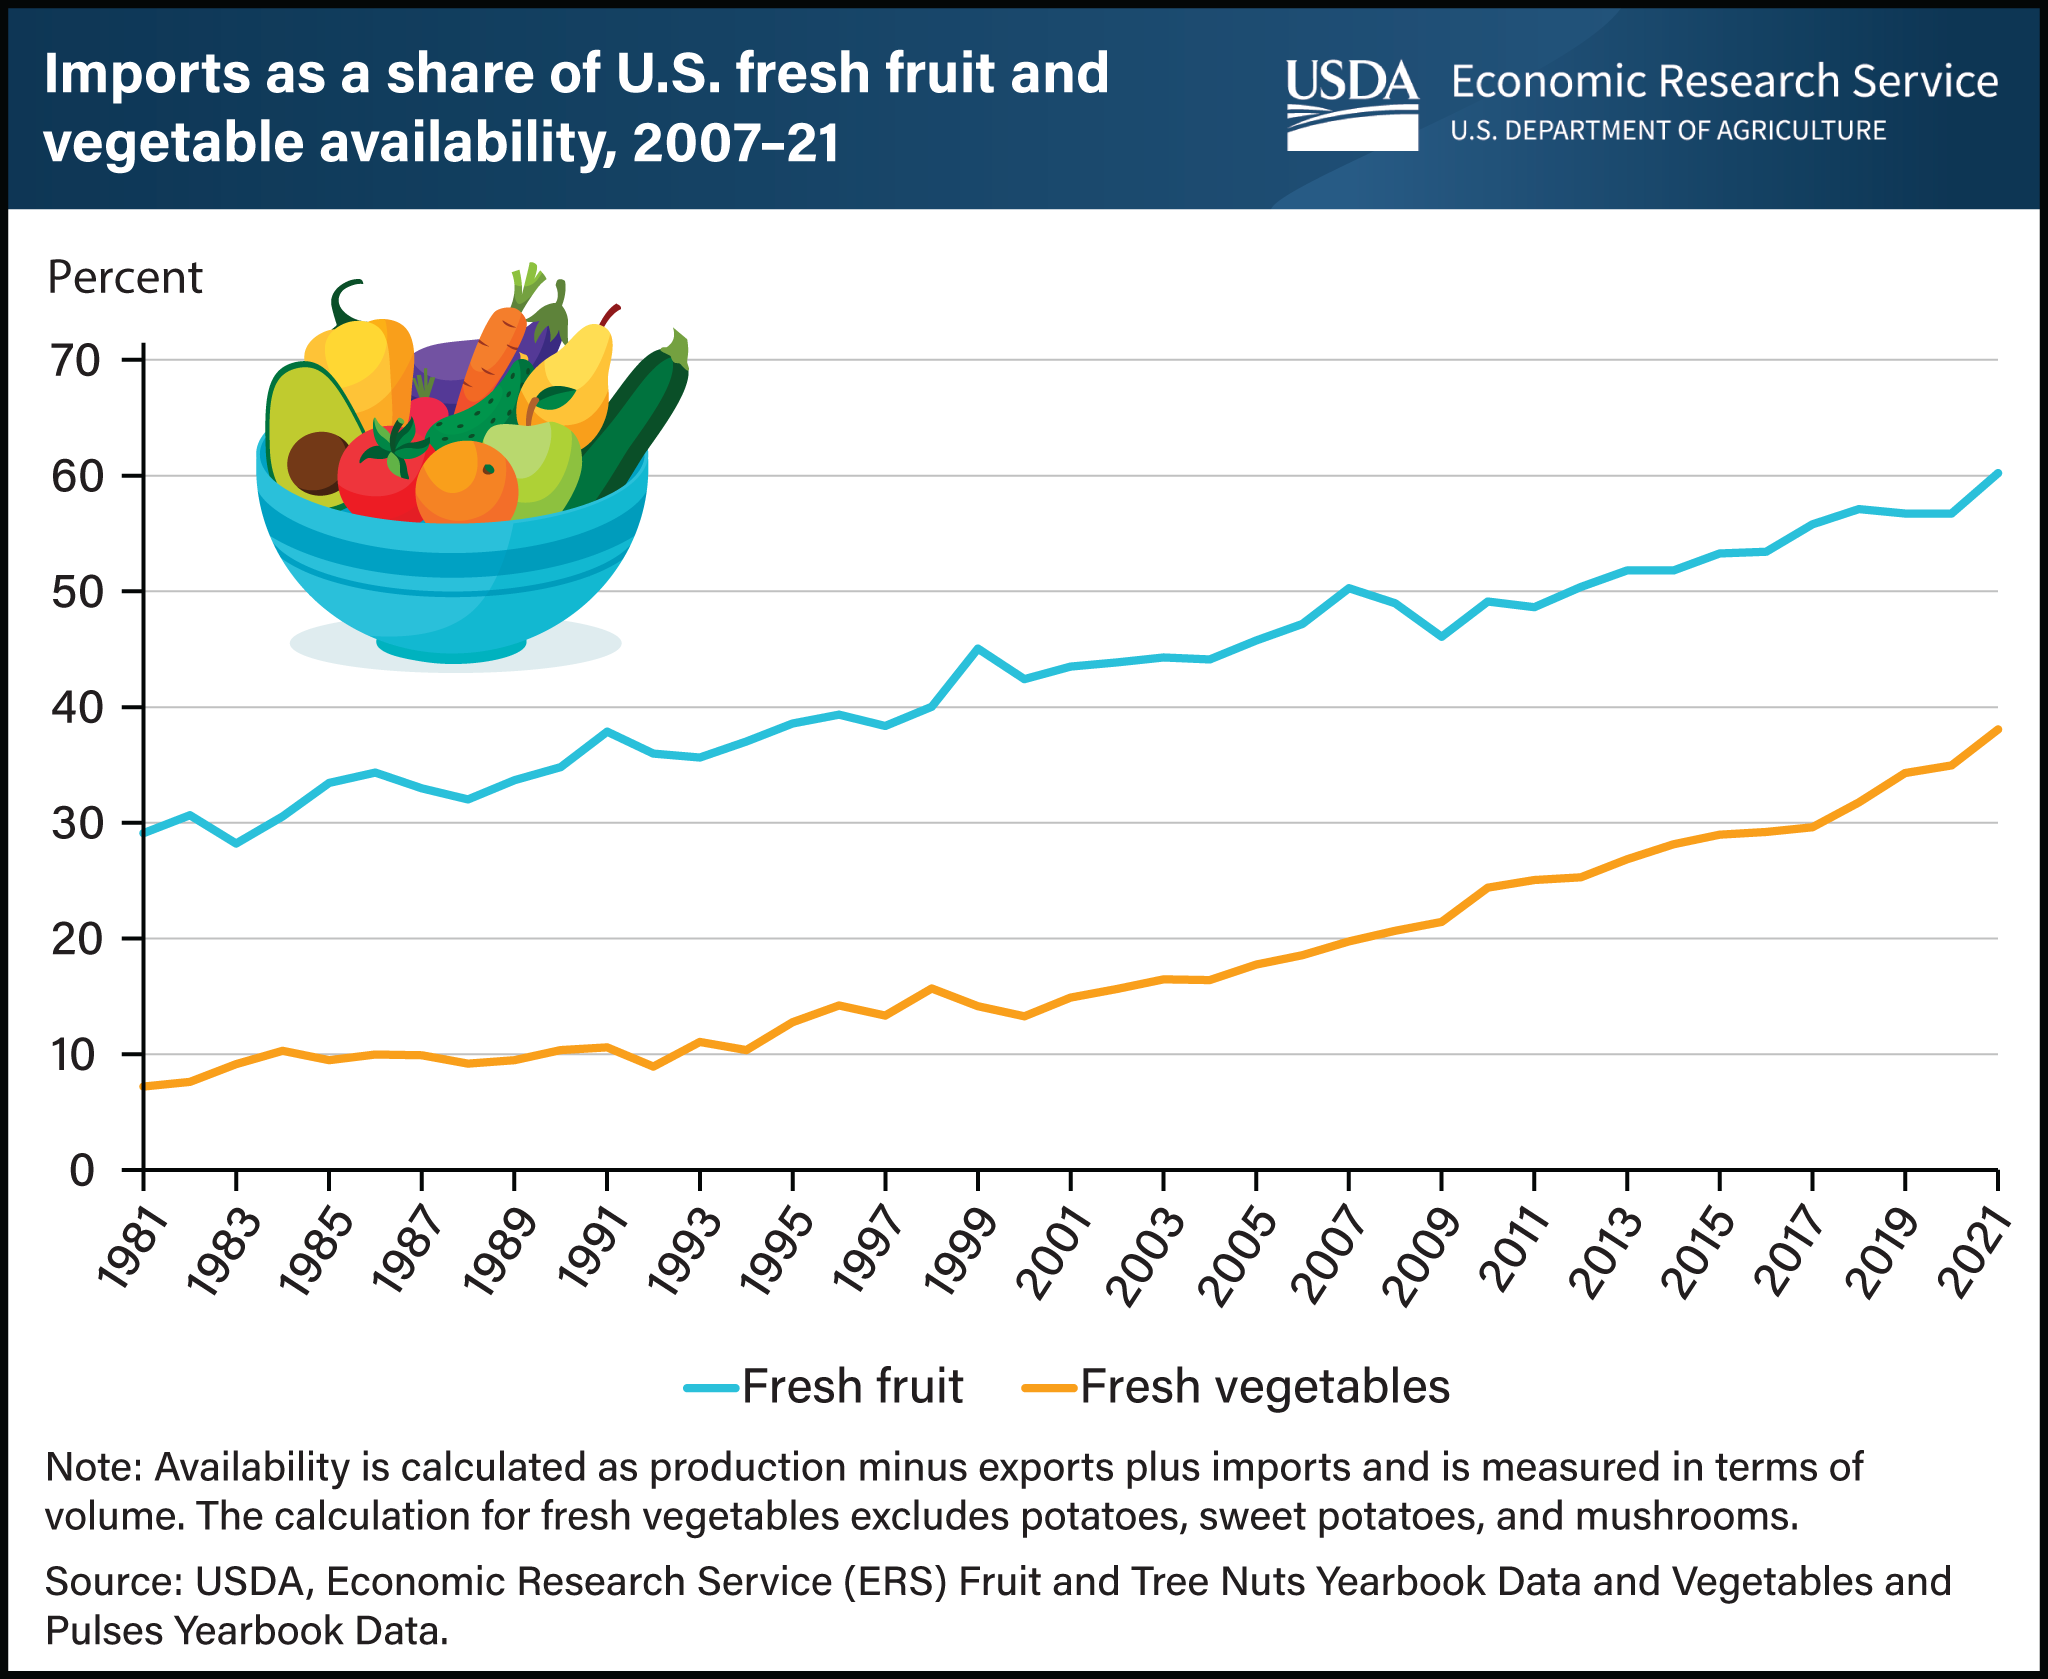 https://www.ers.usda.gov/webdocs/charts/107009/Import-Share-of-U.S.-Produce.png?v=4715.7